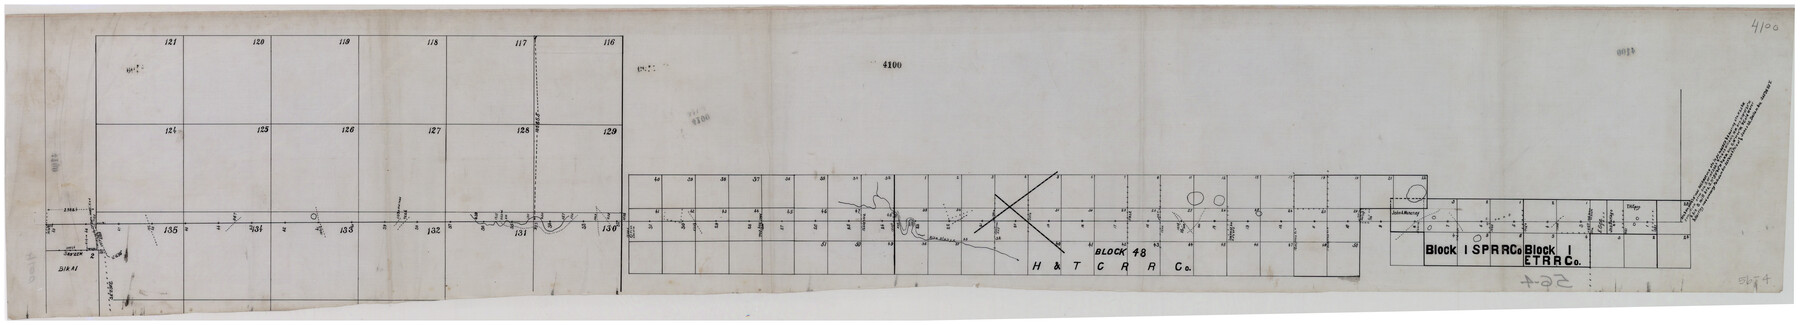 89625, [Sketch showing H. & T. C. R. R. Co. Blk. 48, S. P. R. R. Co. Blk. I, and E. T. R. R. Co. Blk. I], Twichell Survey Records